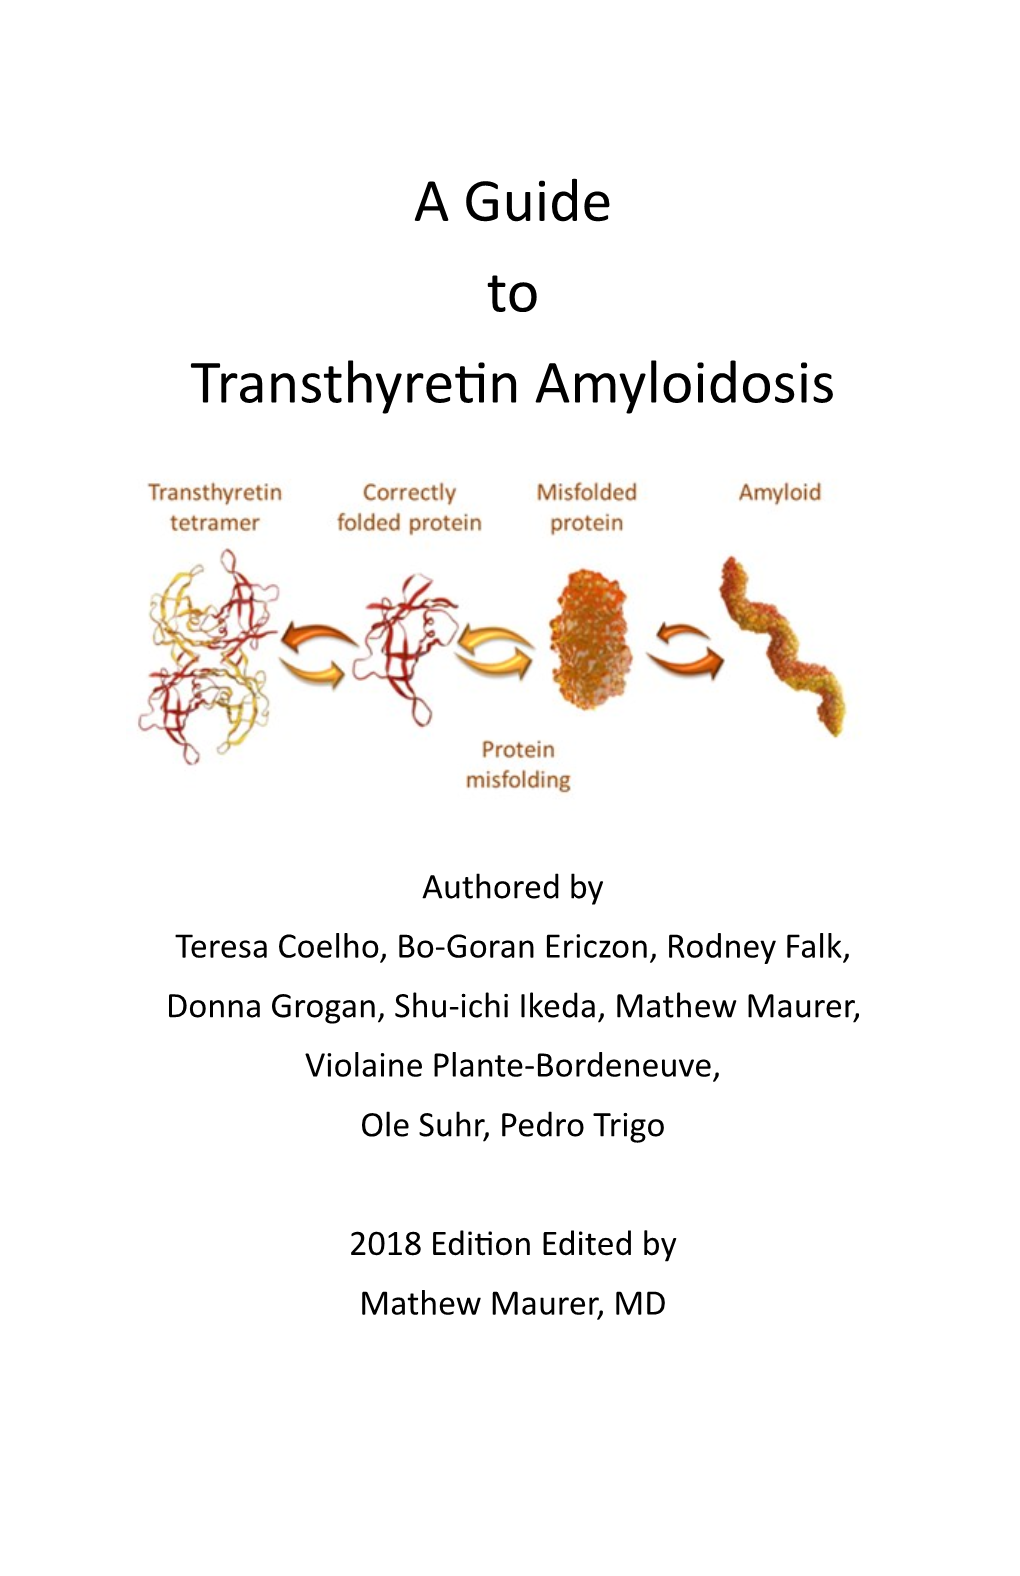 A Guide to Transthyretin Amyloidosis